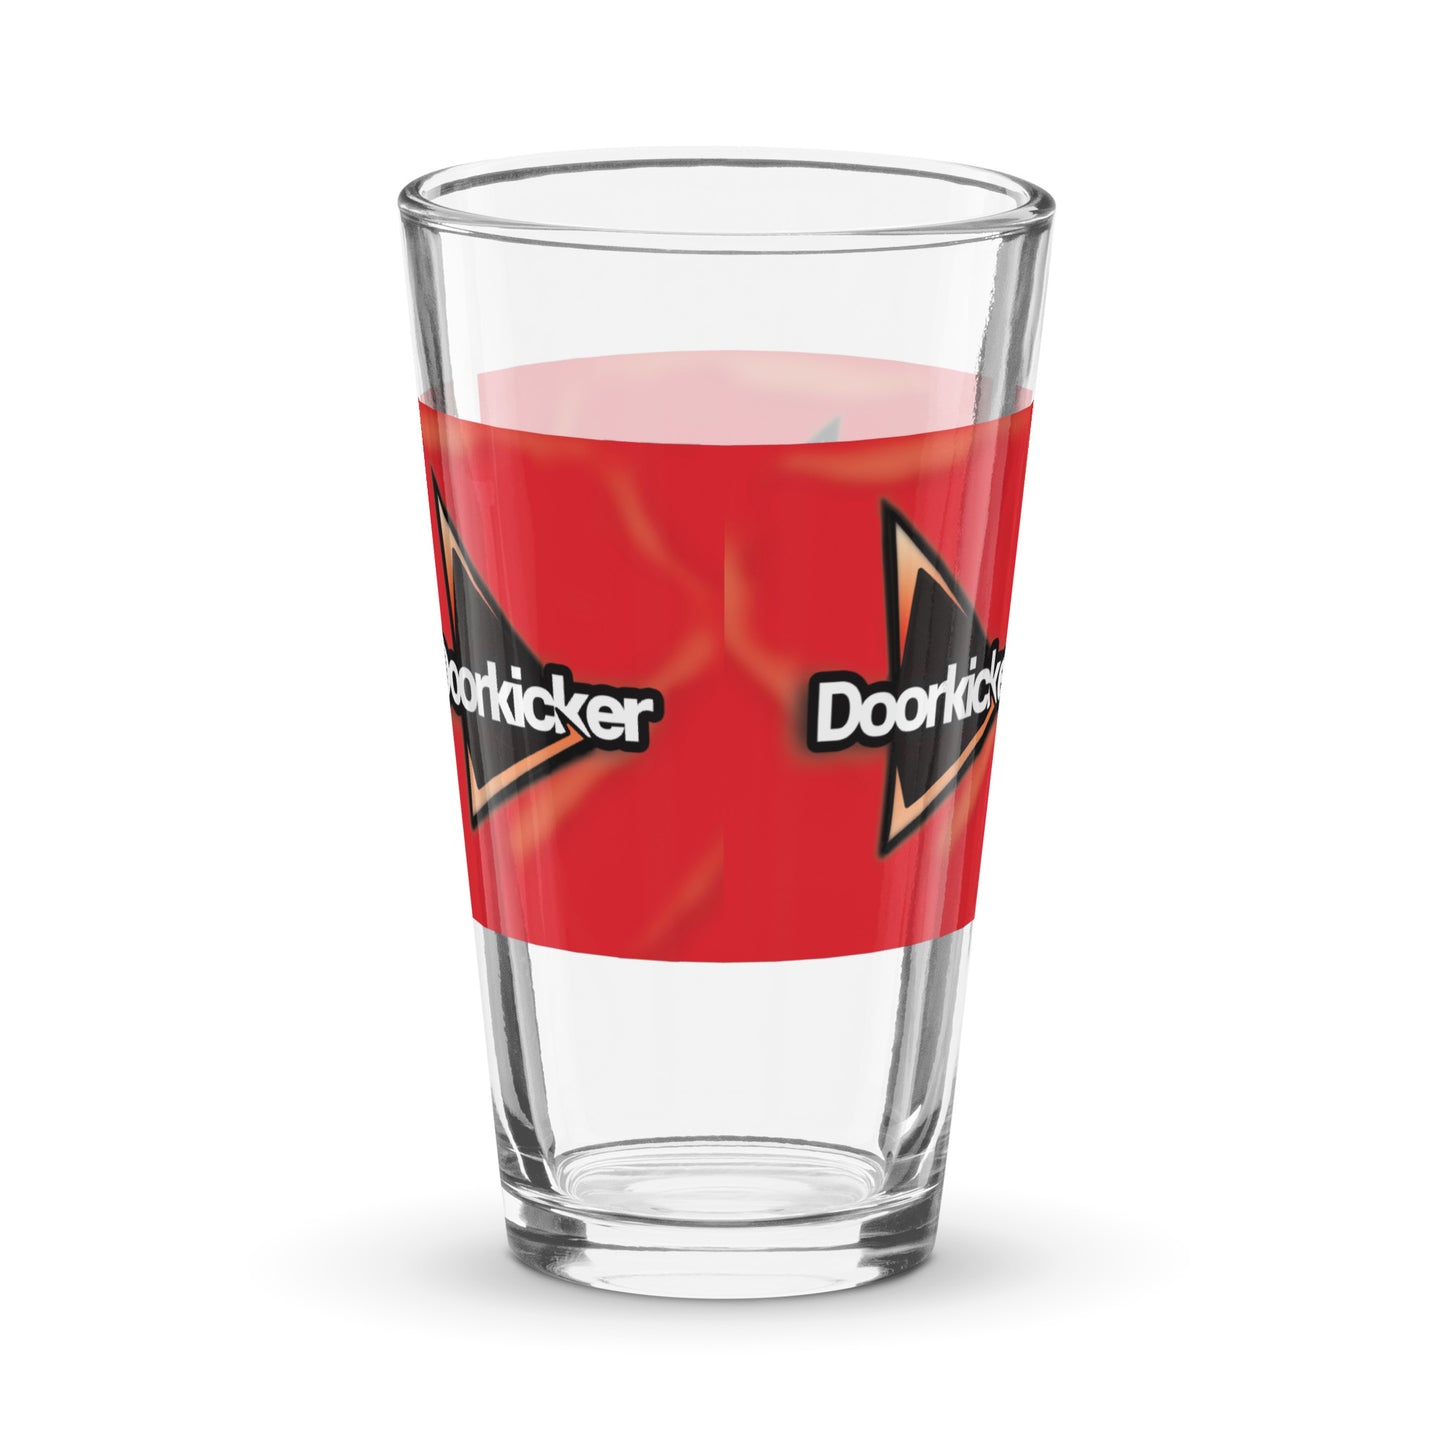 Doorkicker Shaker pint glass